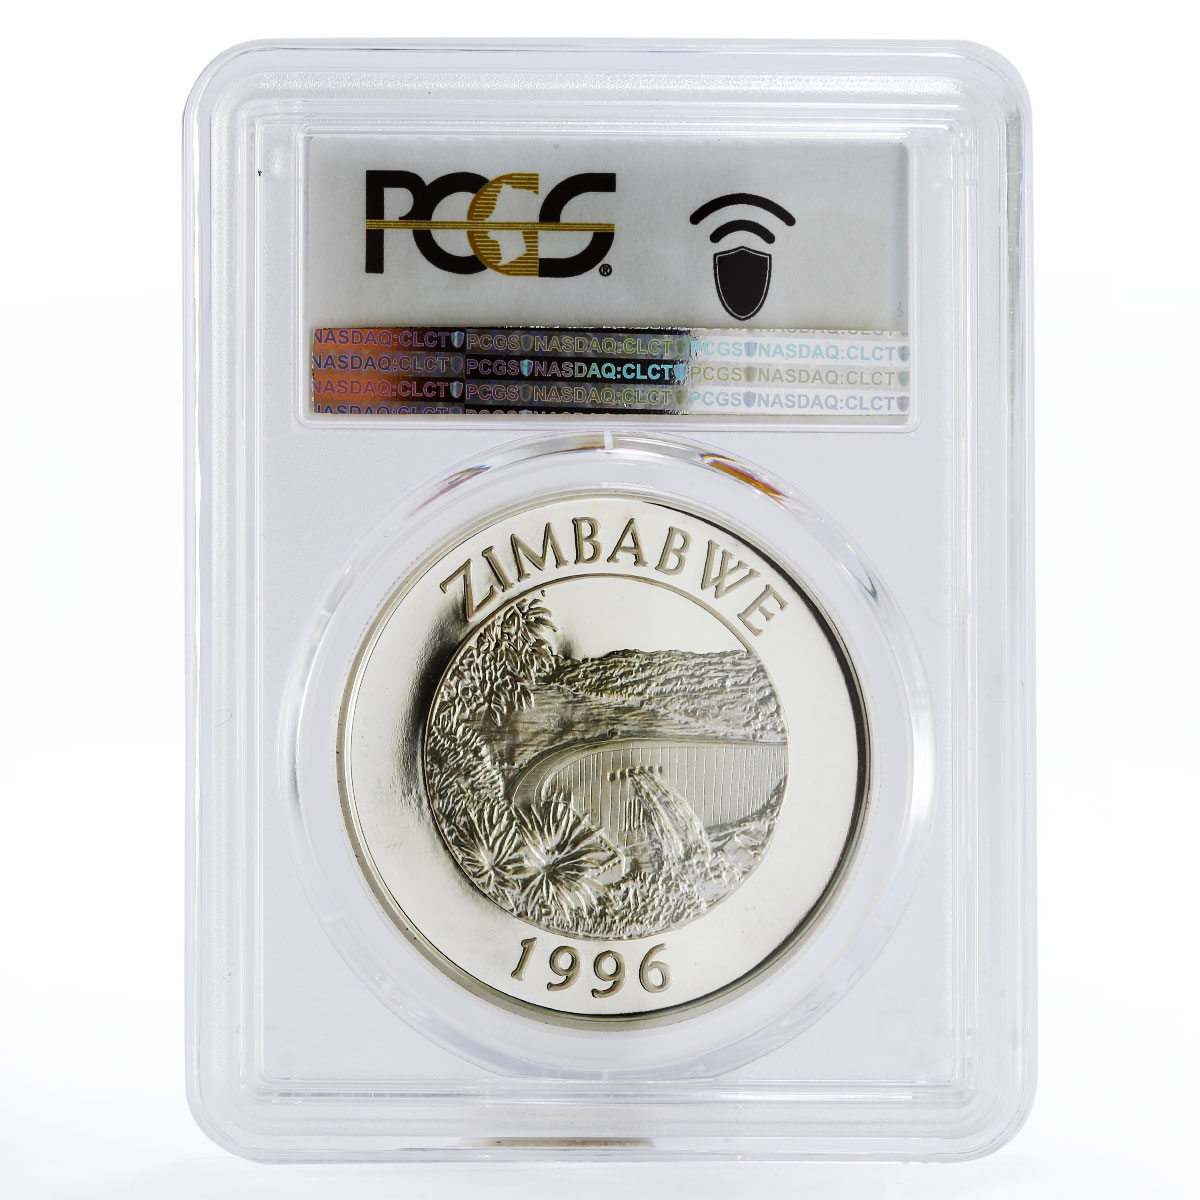 Zimbabwe 10 dollars Wildlife Landmarks Elephant PR67 PCGS silver coin 1996